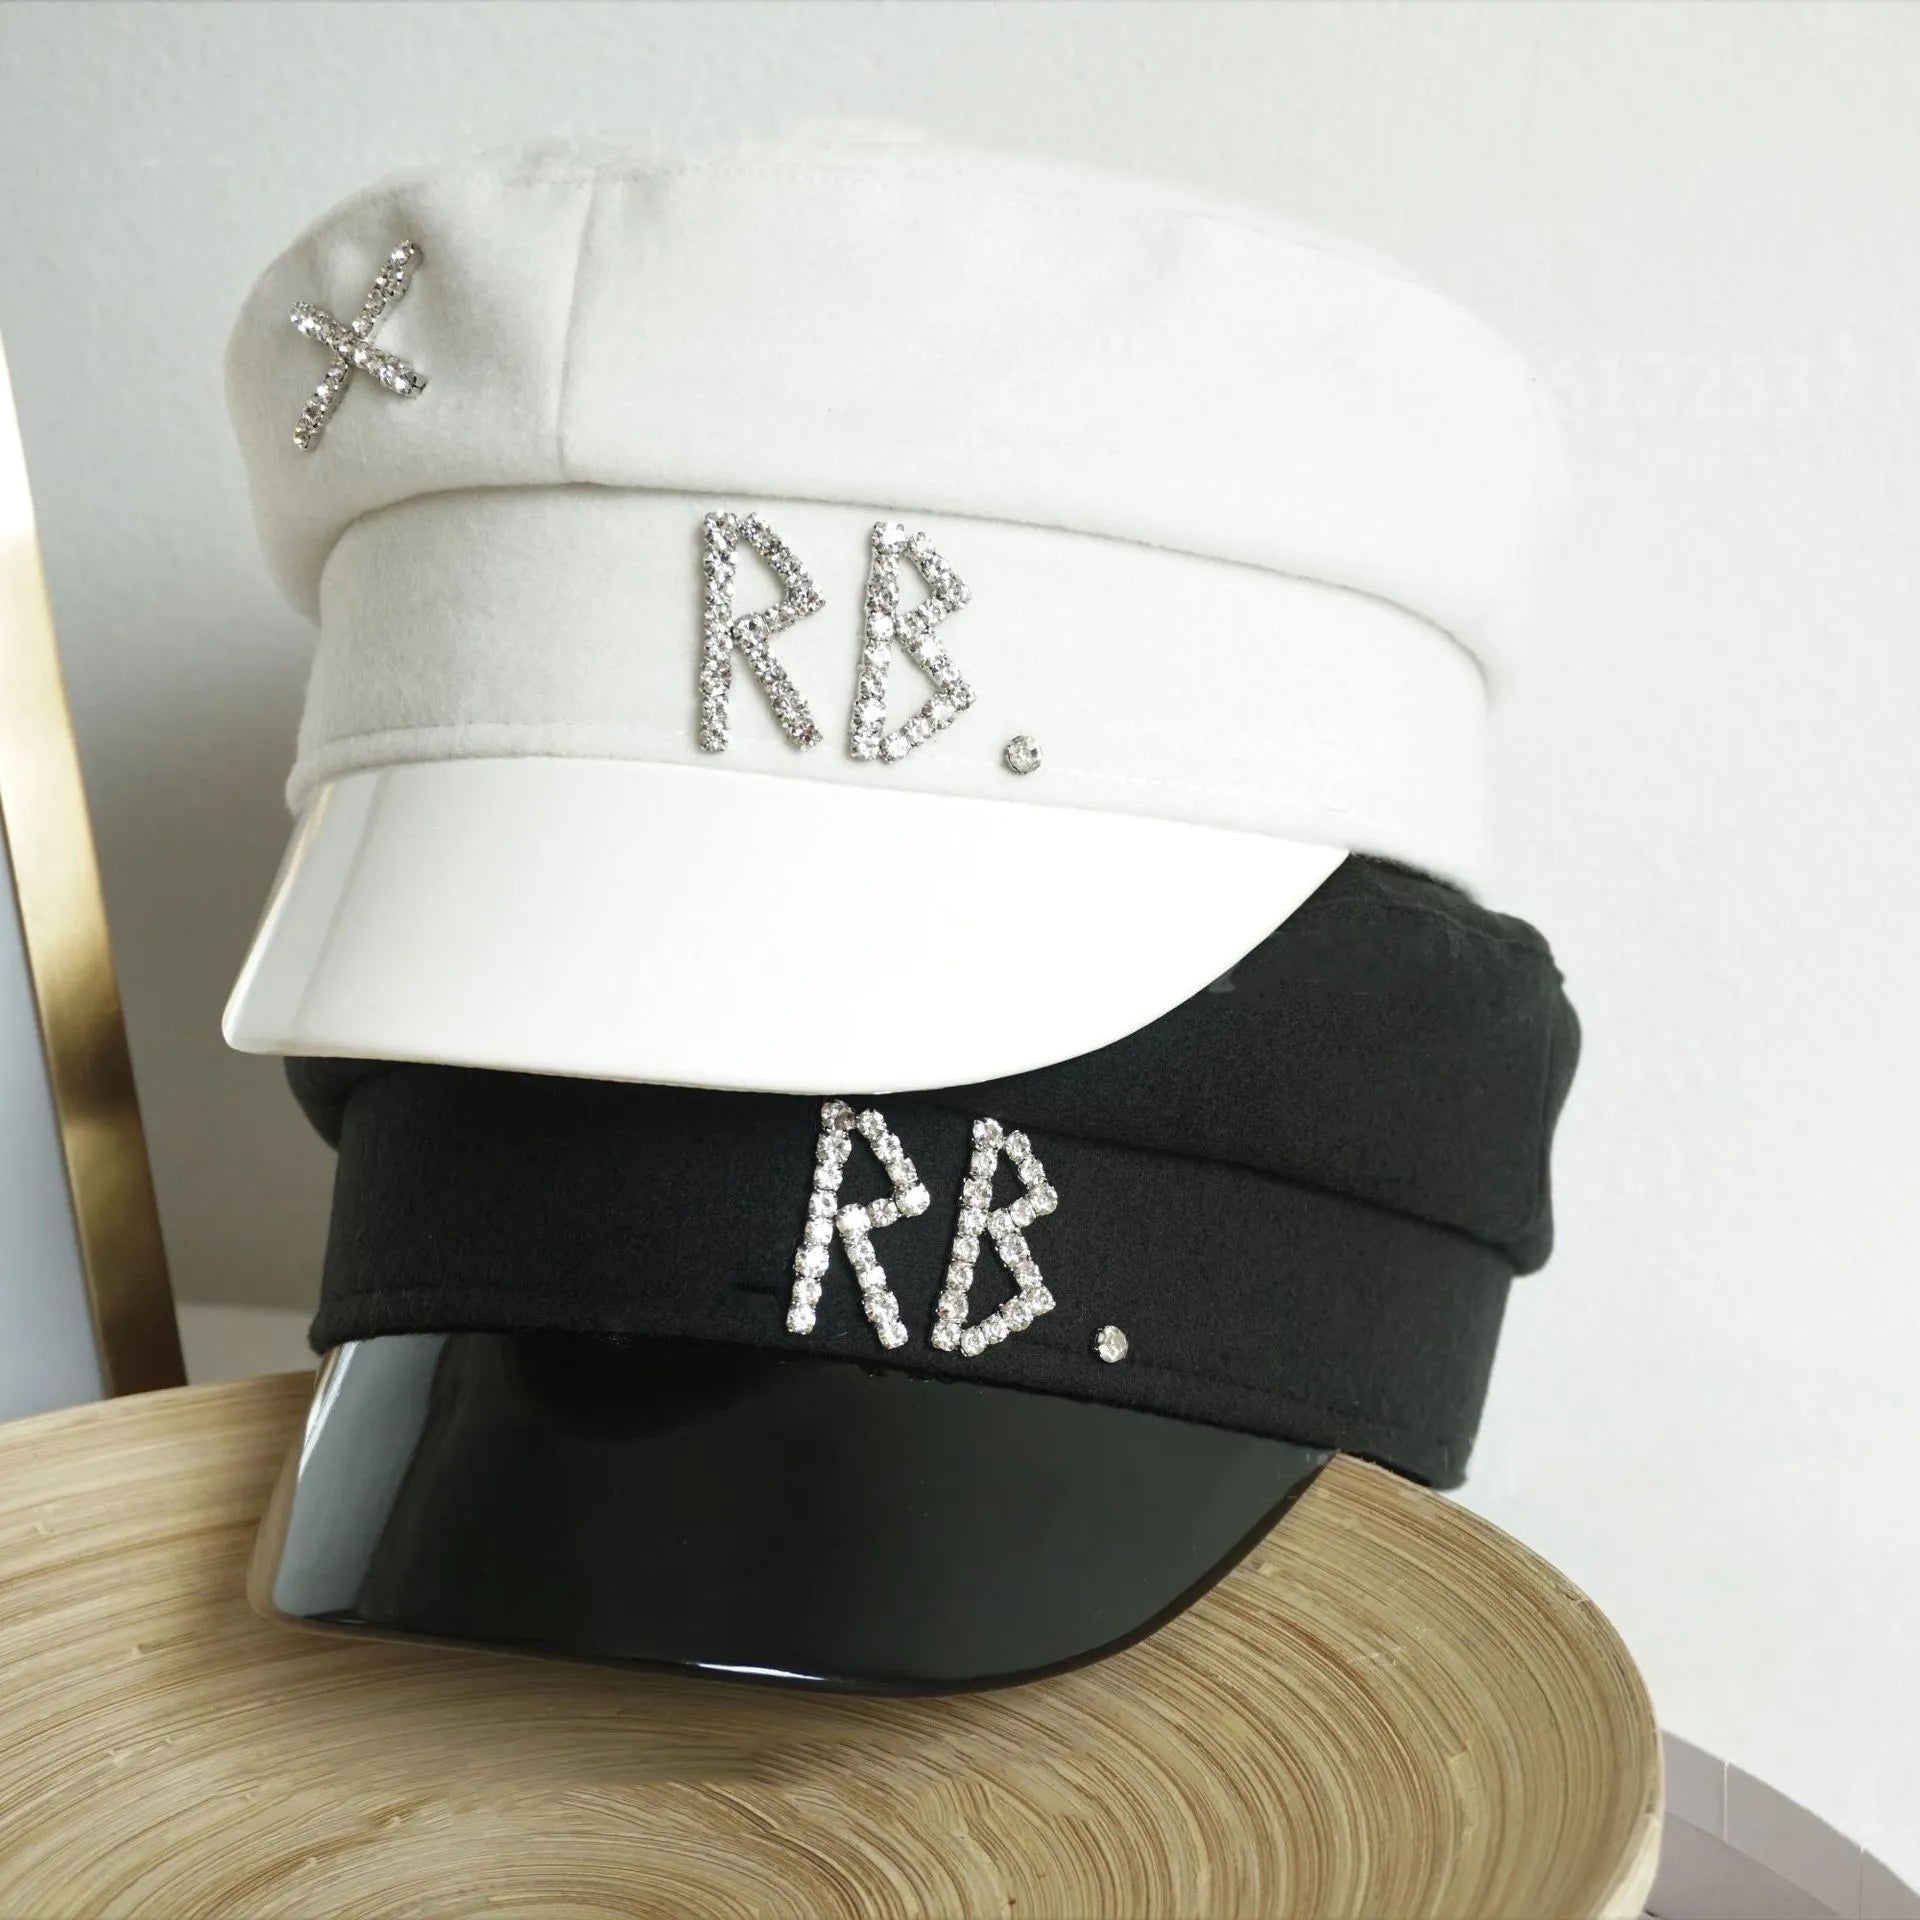 RB hats